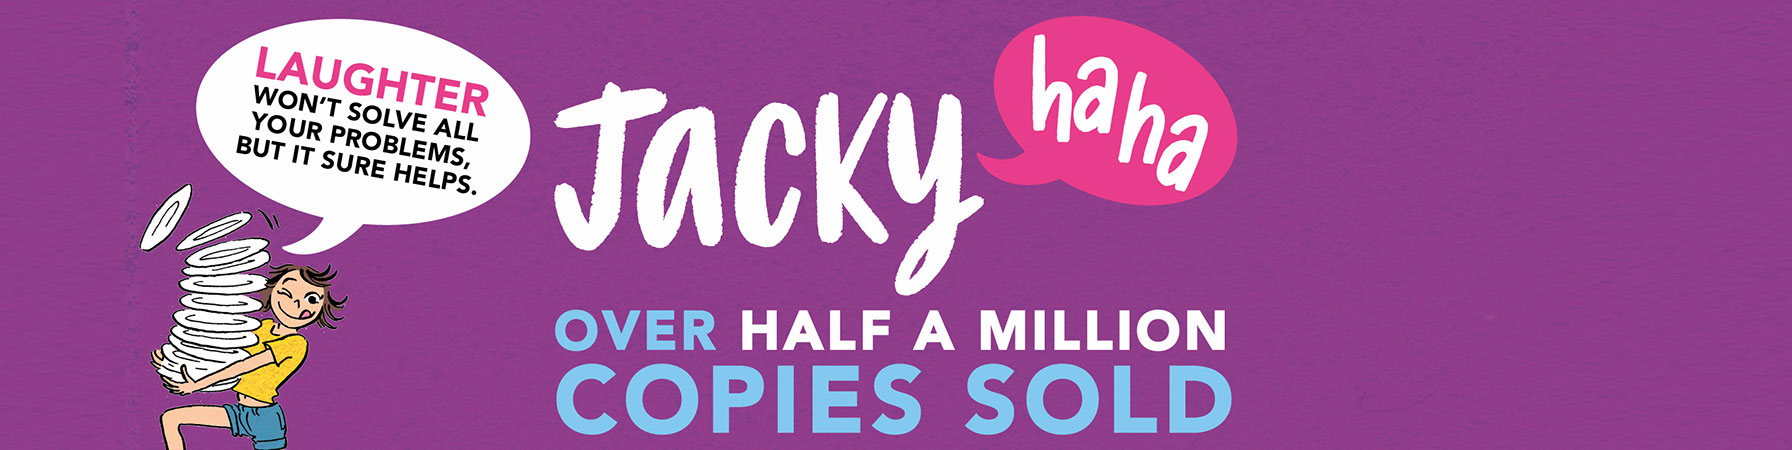 Jacky haha over half a million copies sold